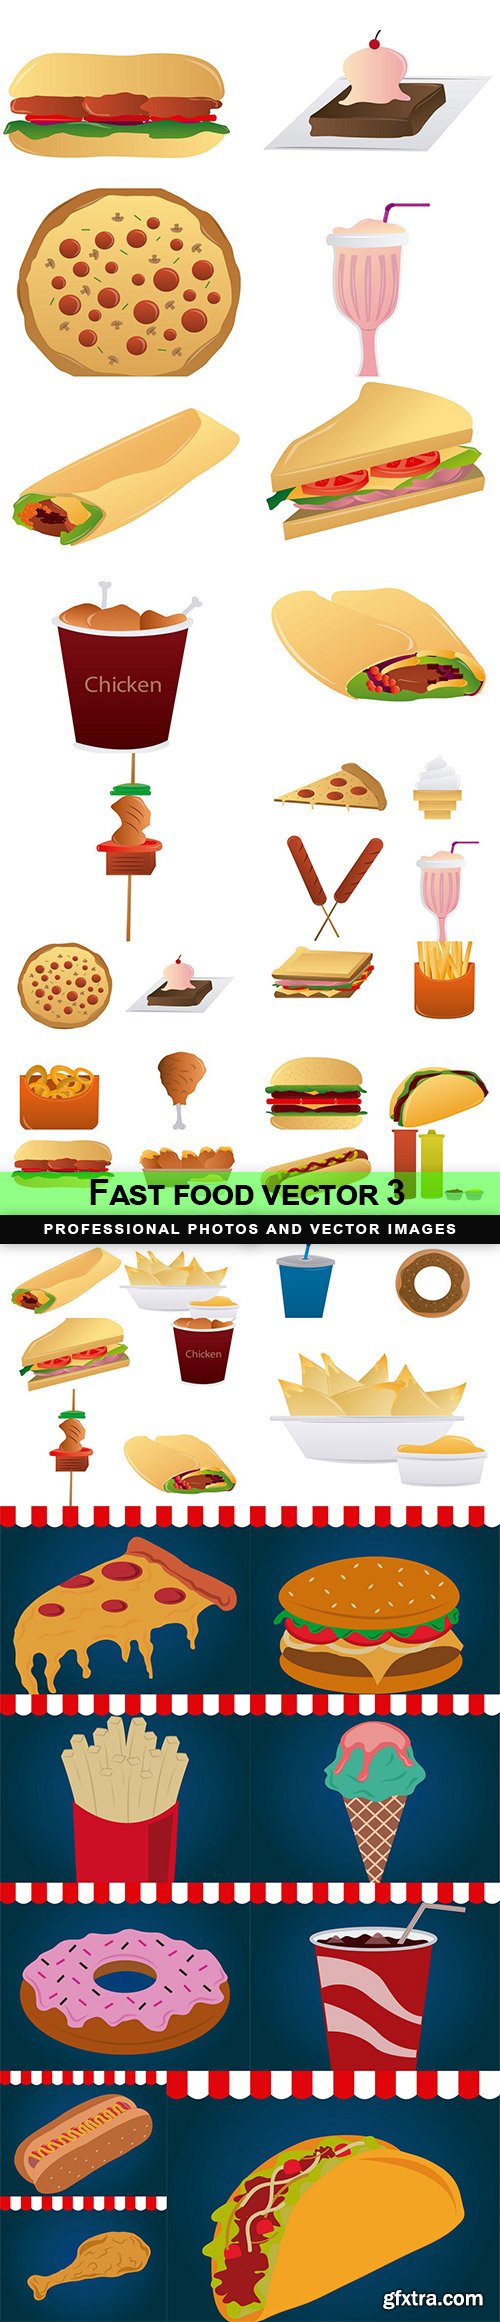 Fast food vector 3